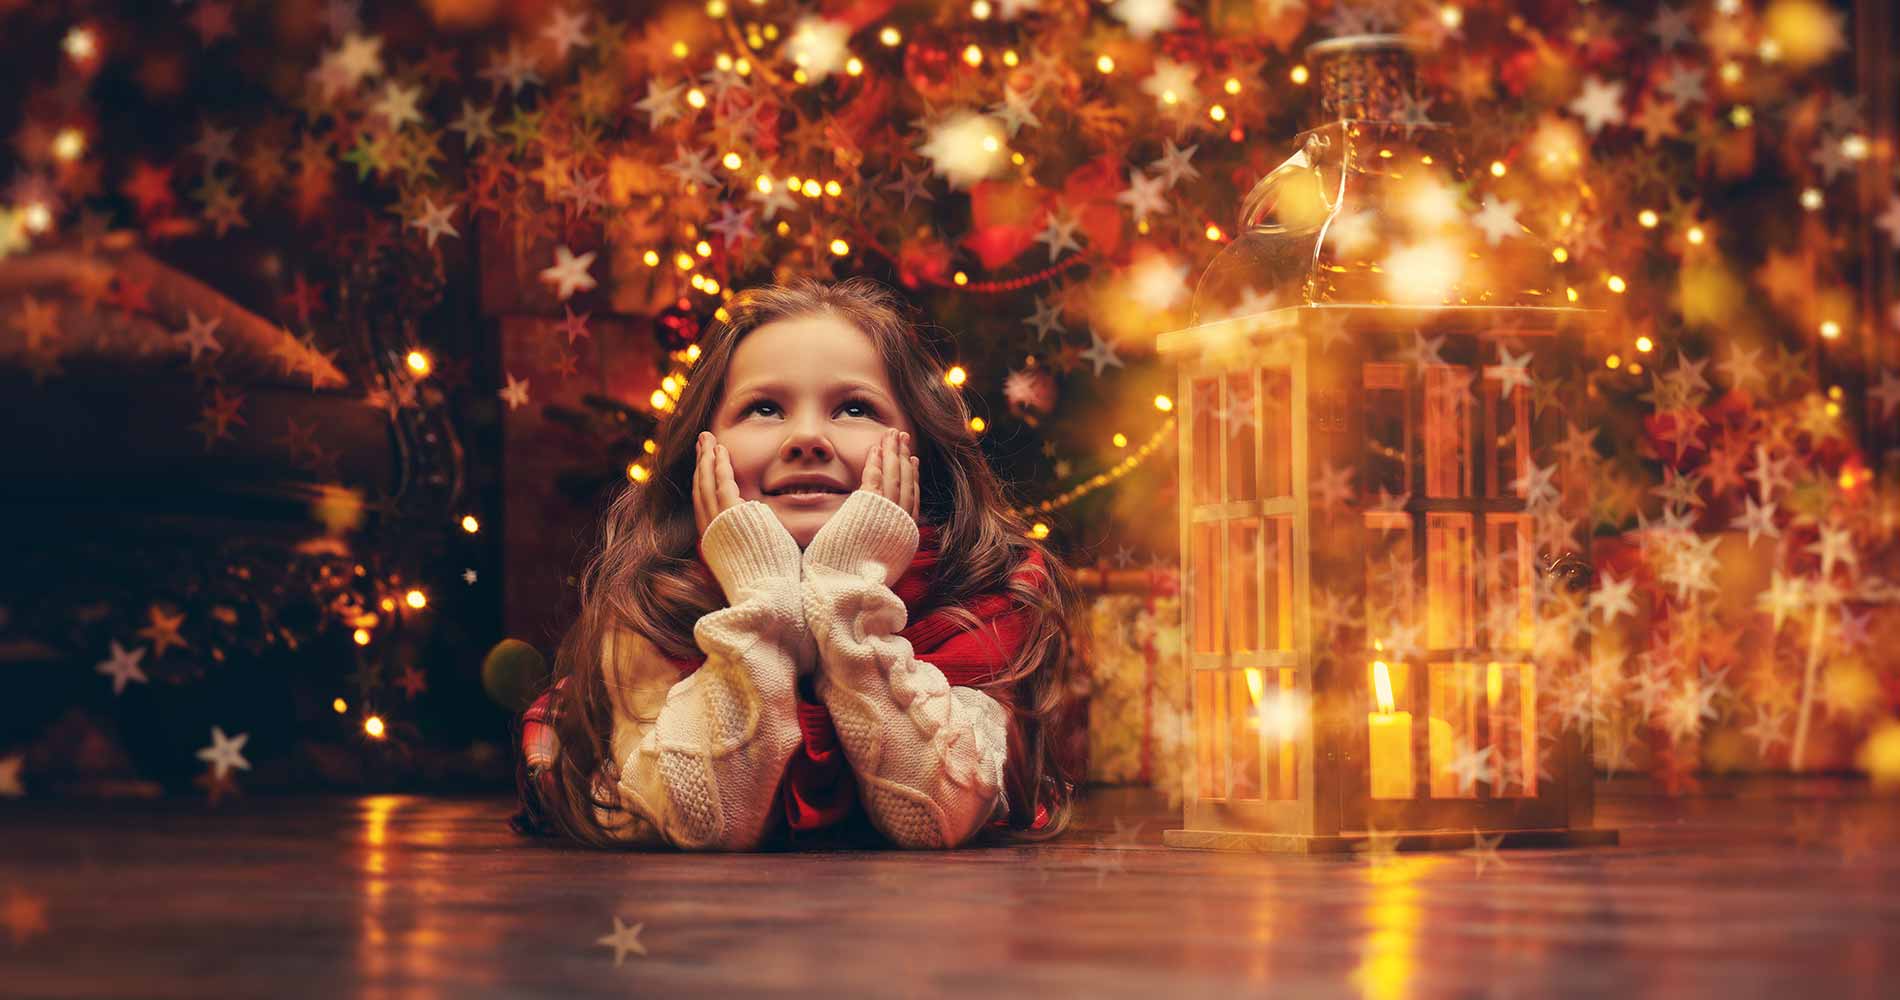 Young girl dreaming of Christmas